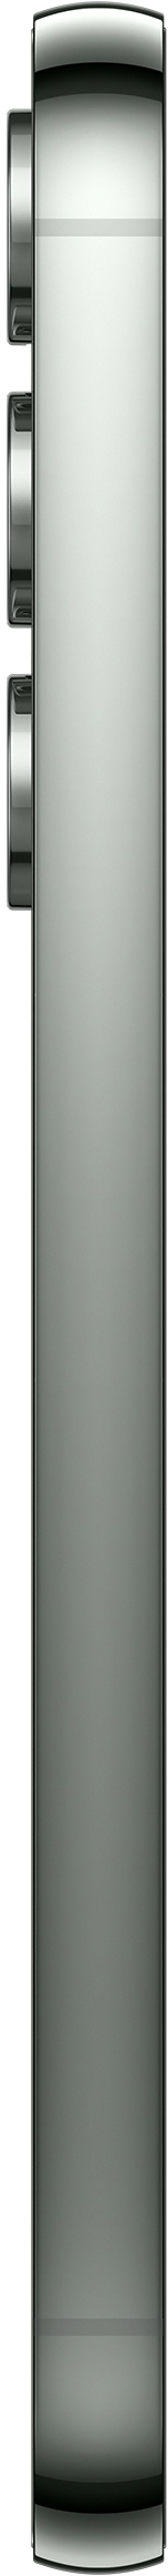 Samsung Galaxy S23 128GB Dobbelt-SIM Grønn